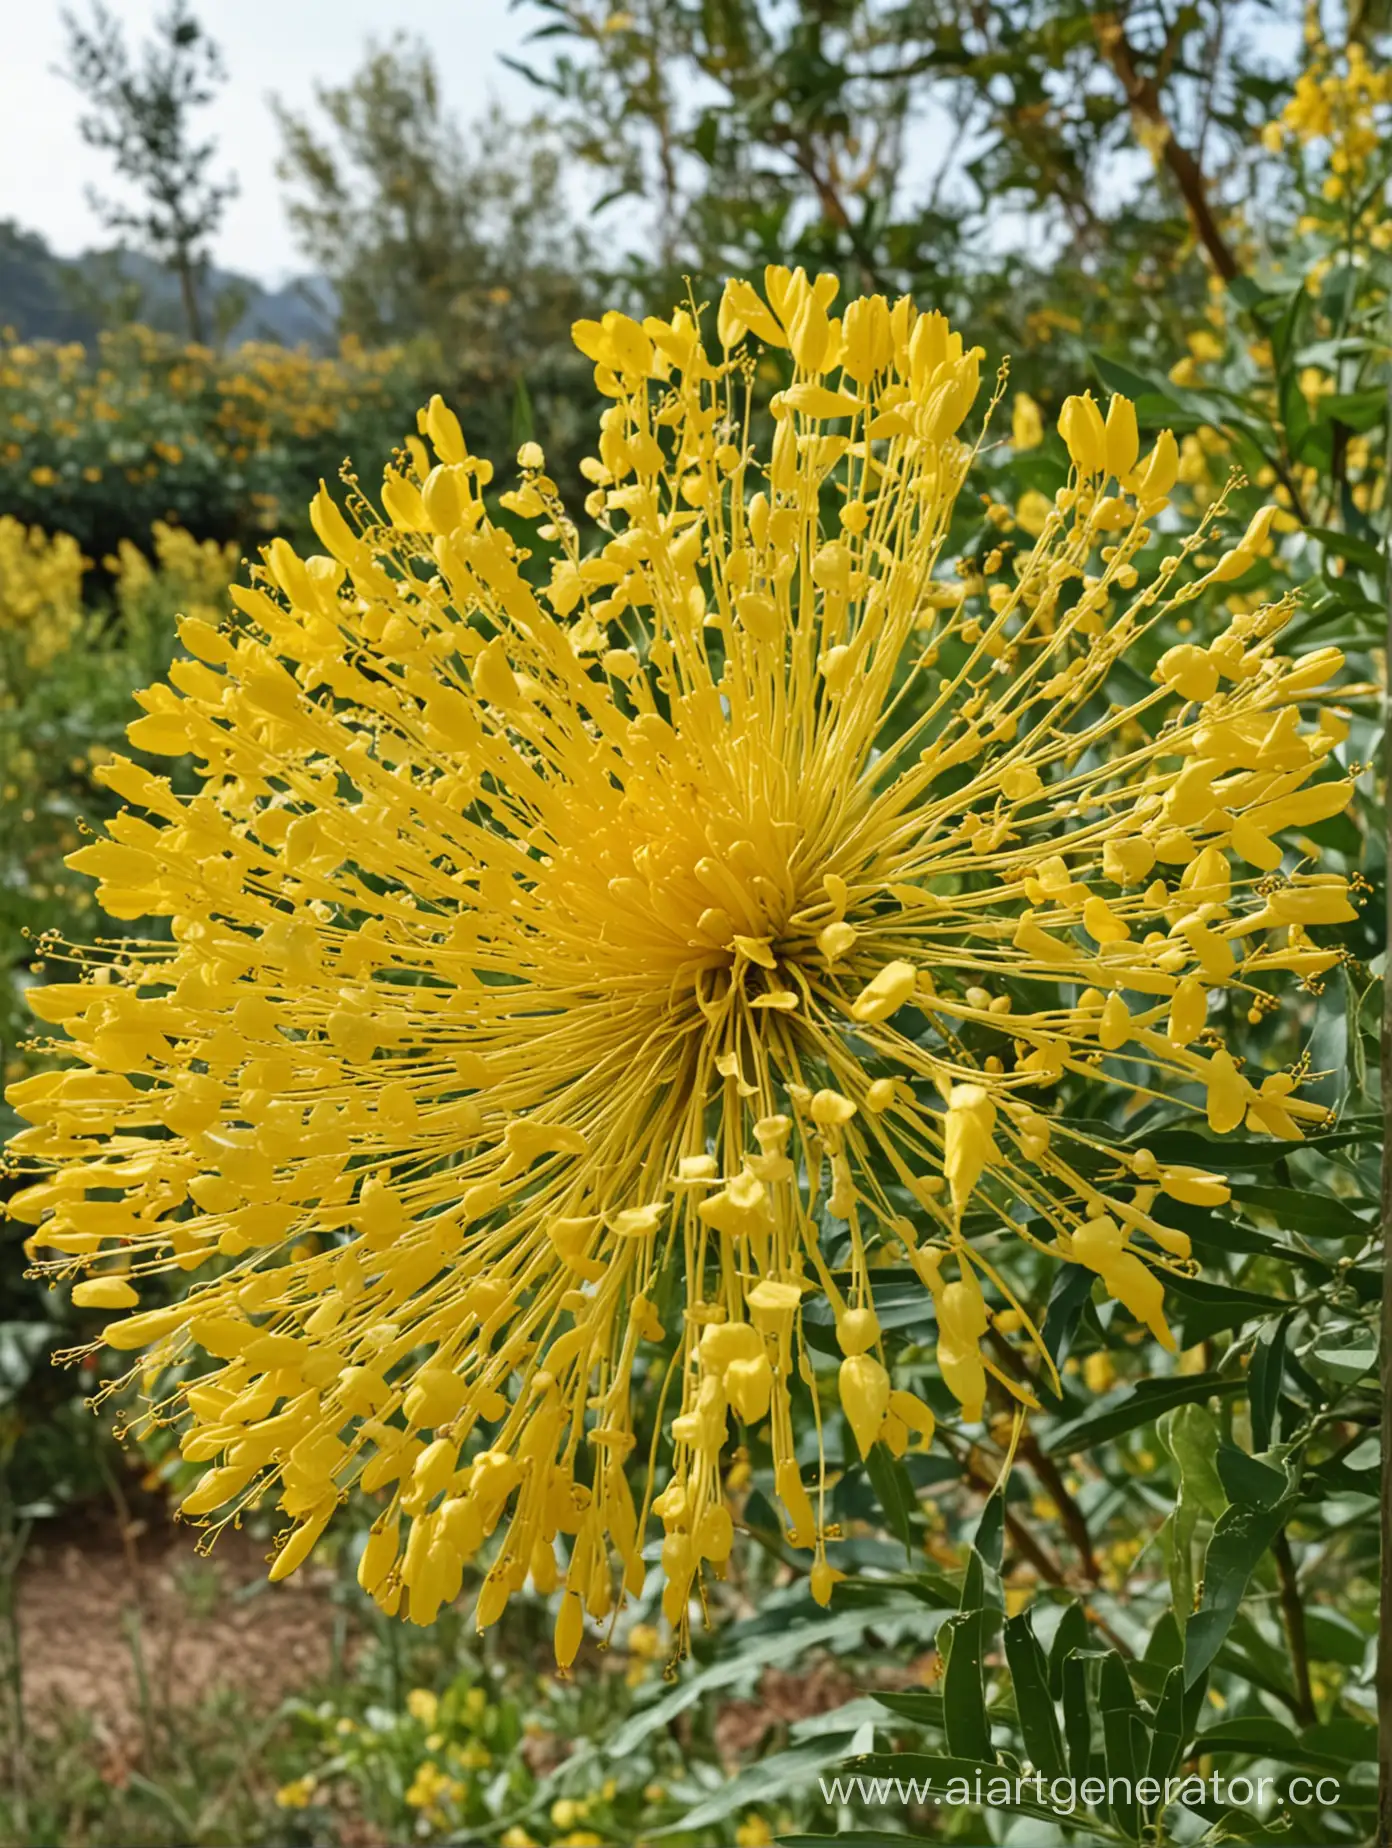 Vibrant-Acacia-Yellow-Big-Flower-Closeup-Amidst-Lush-Greenery-in-8K-Resolution